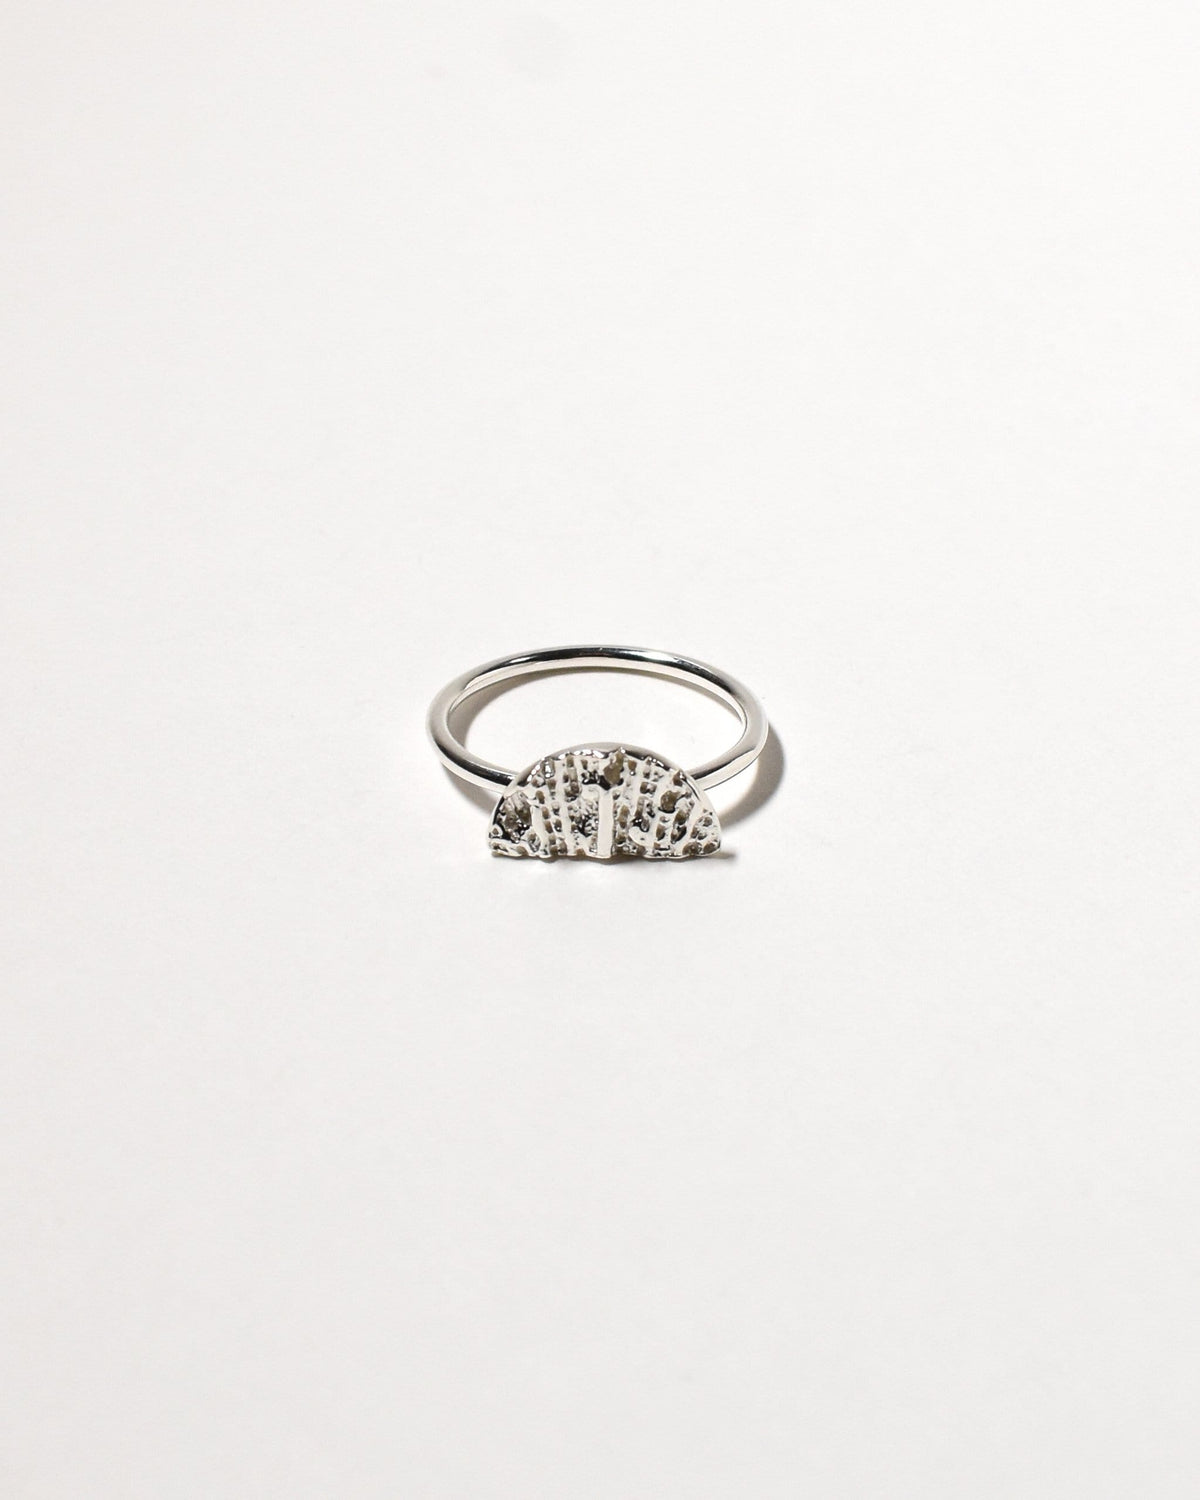 Wanda Ring (Small), Sterling Silver